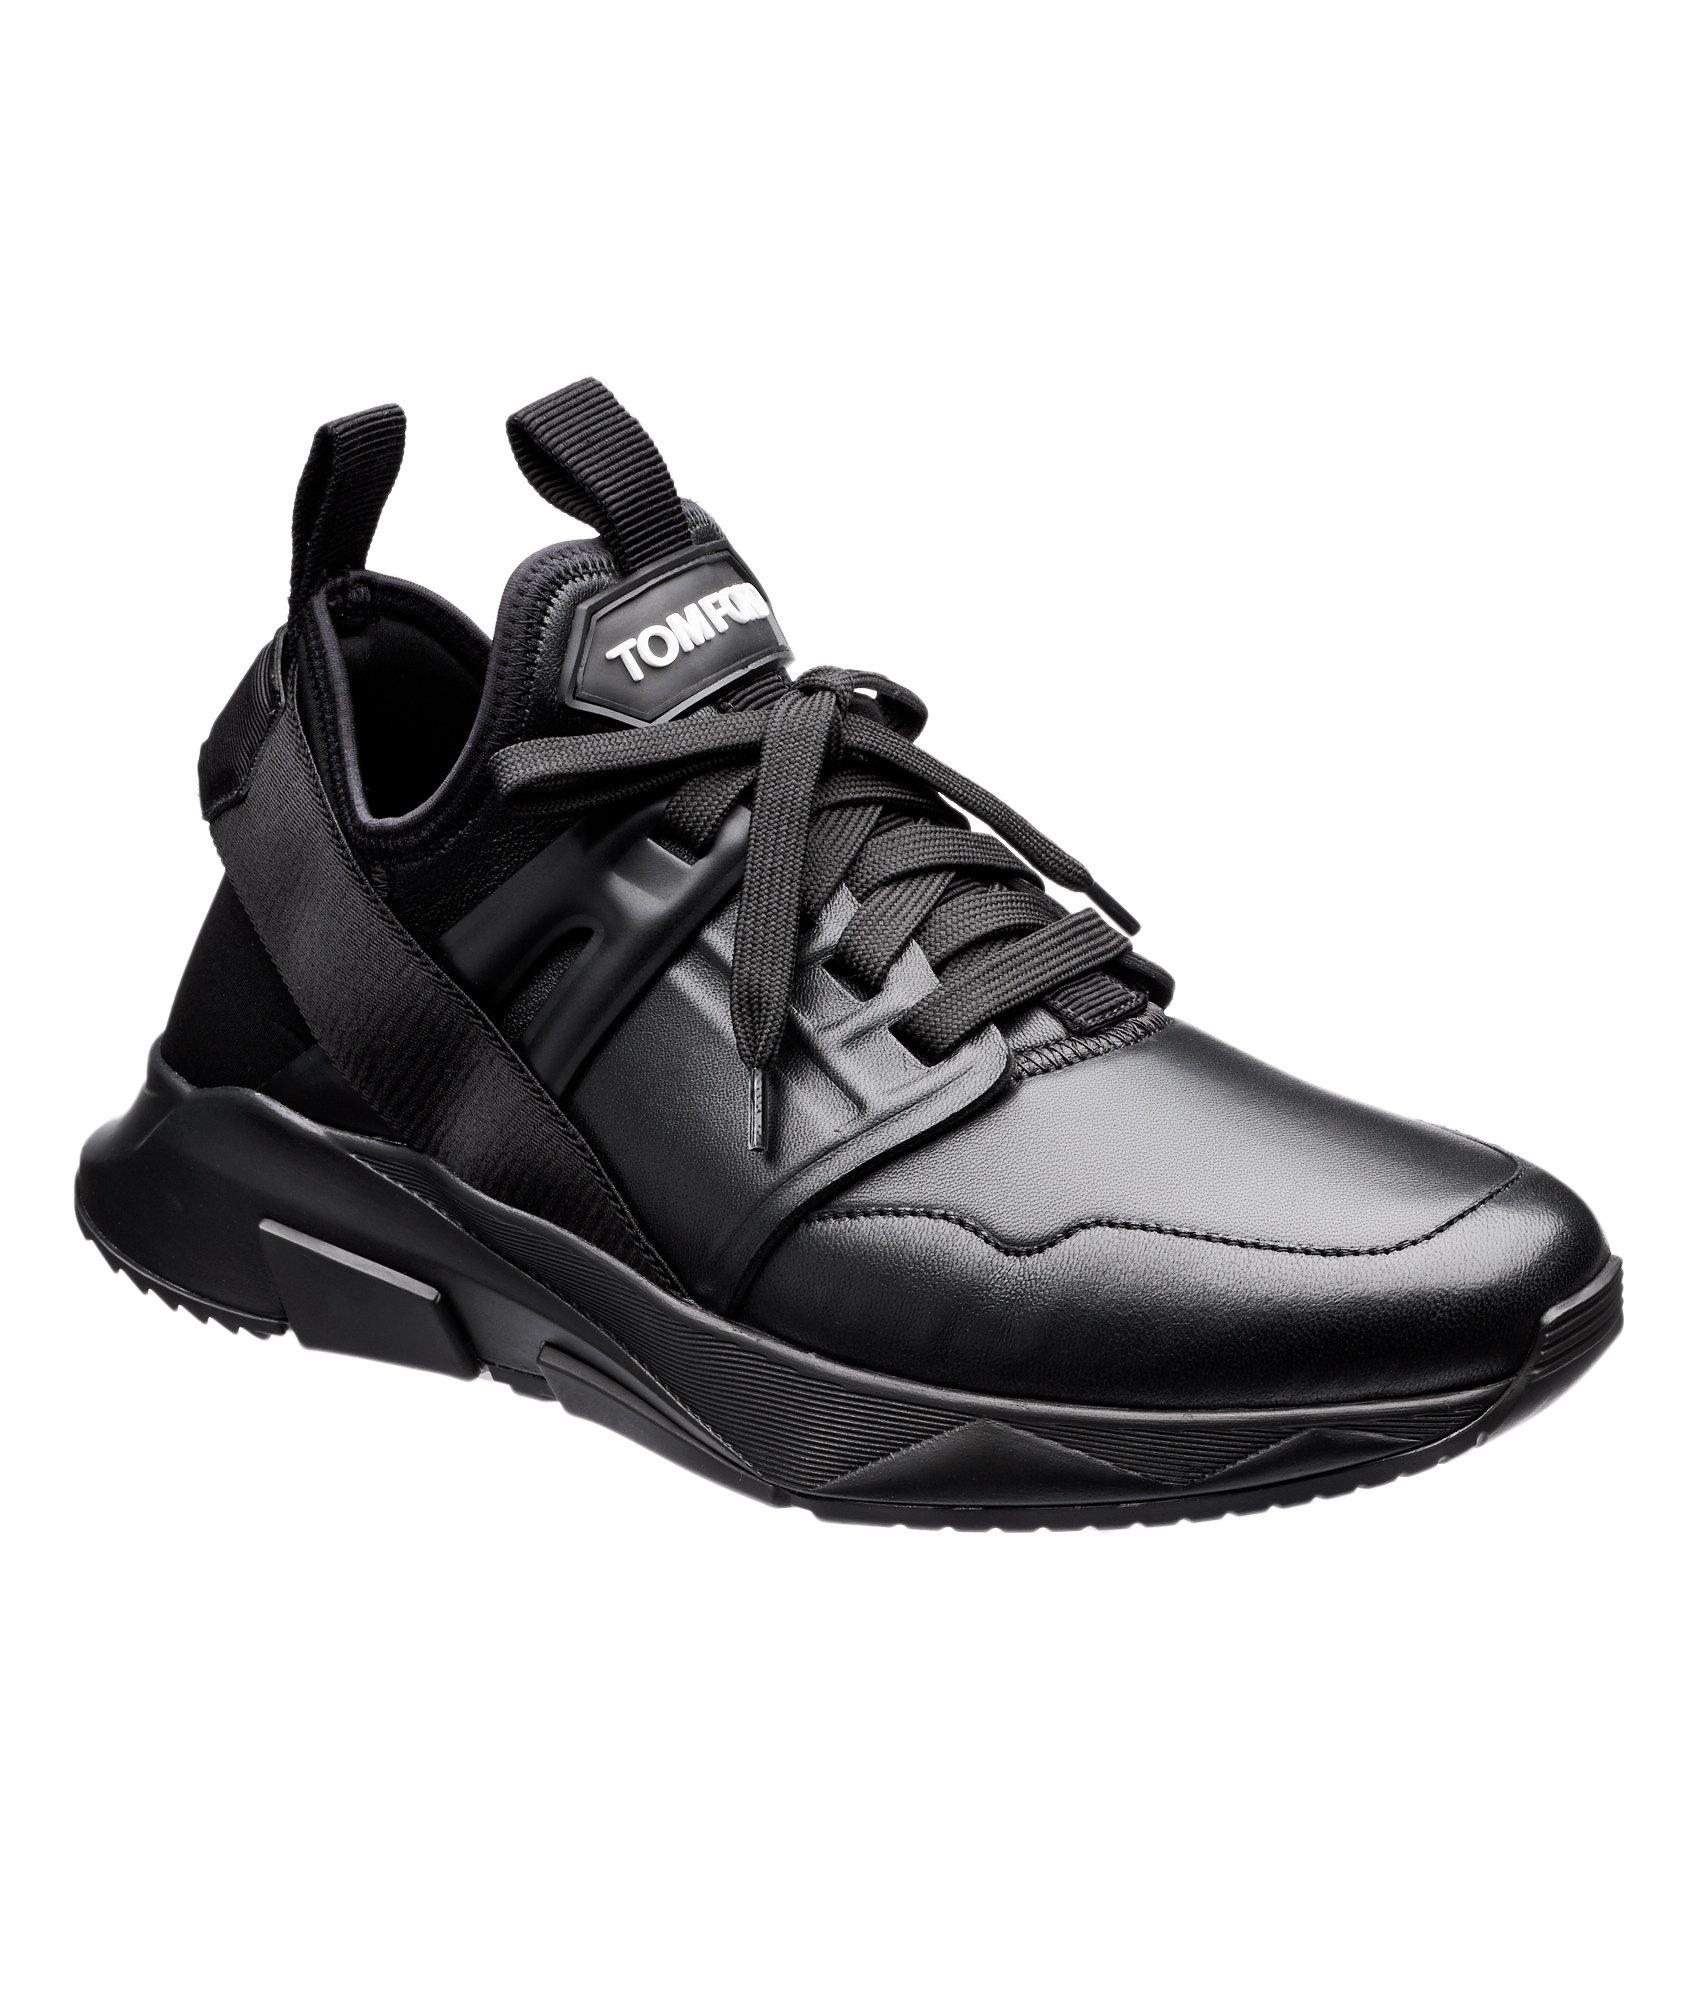 Jago Leather & Neoprene Sneakers image 0